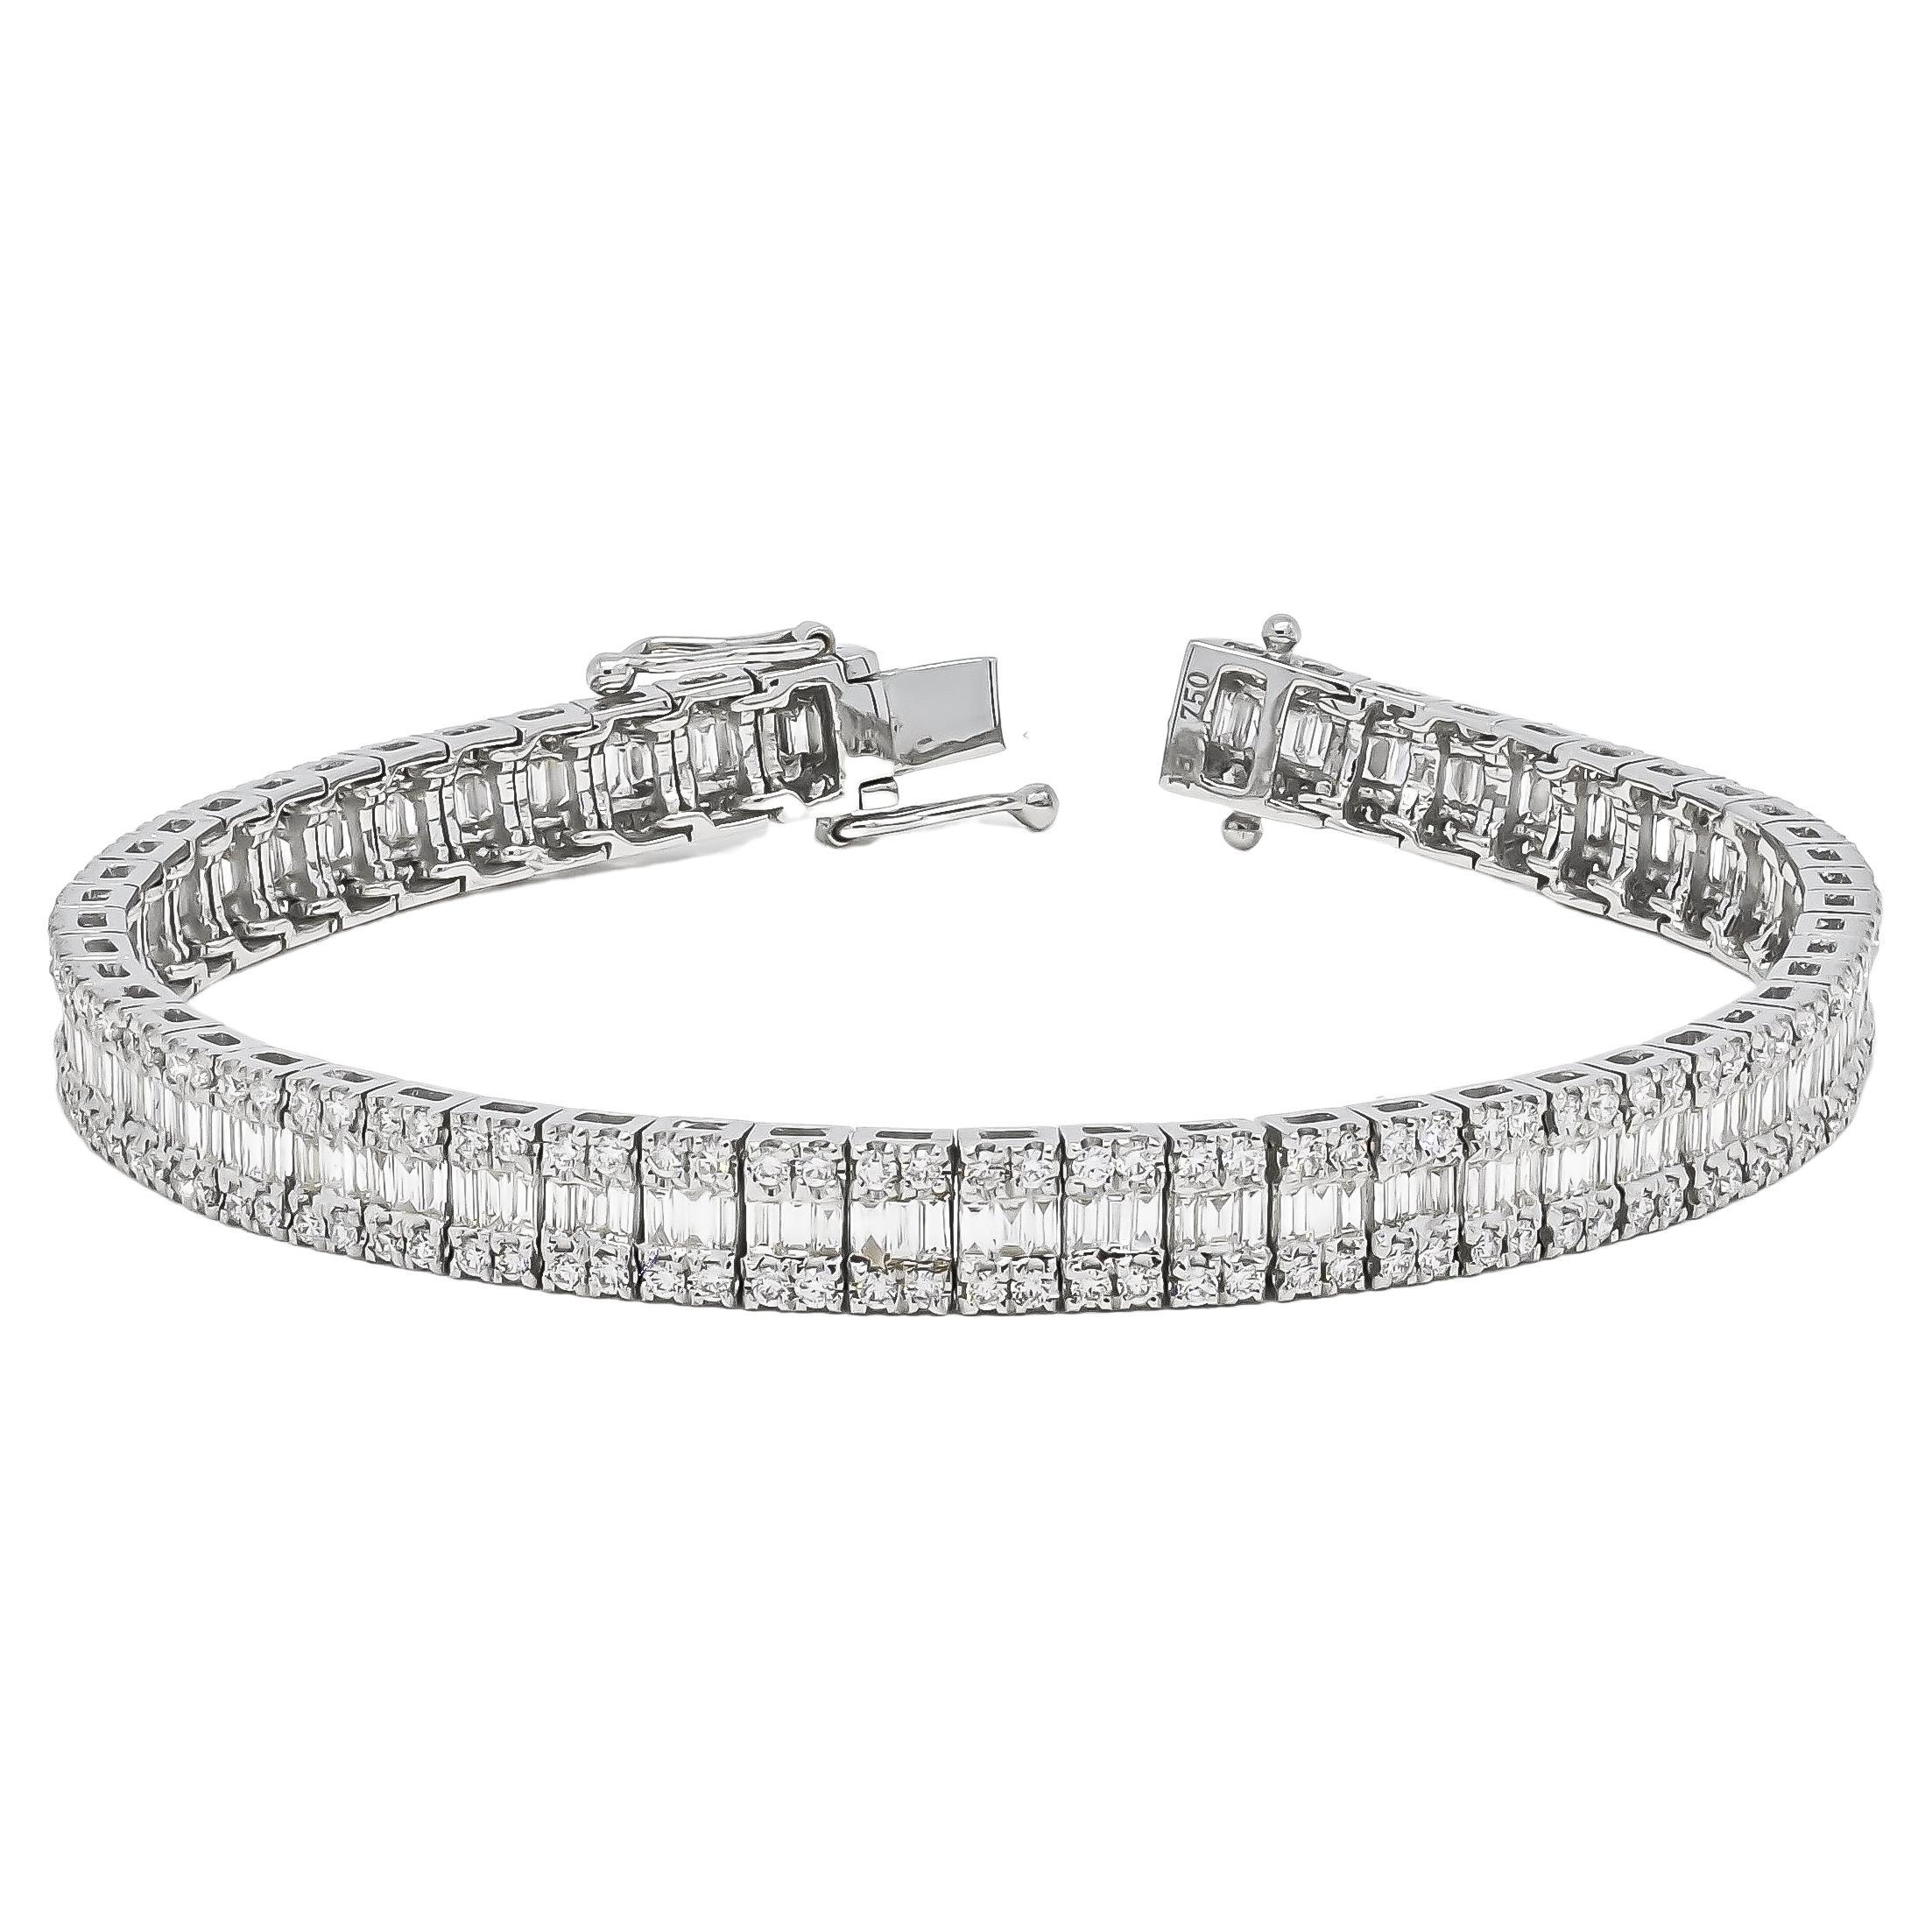 Natural Diamonds 6.7 carats 18KT White Gold Baguette Tennis Bracelet For Sale